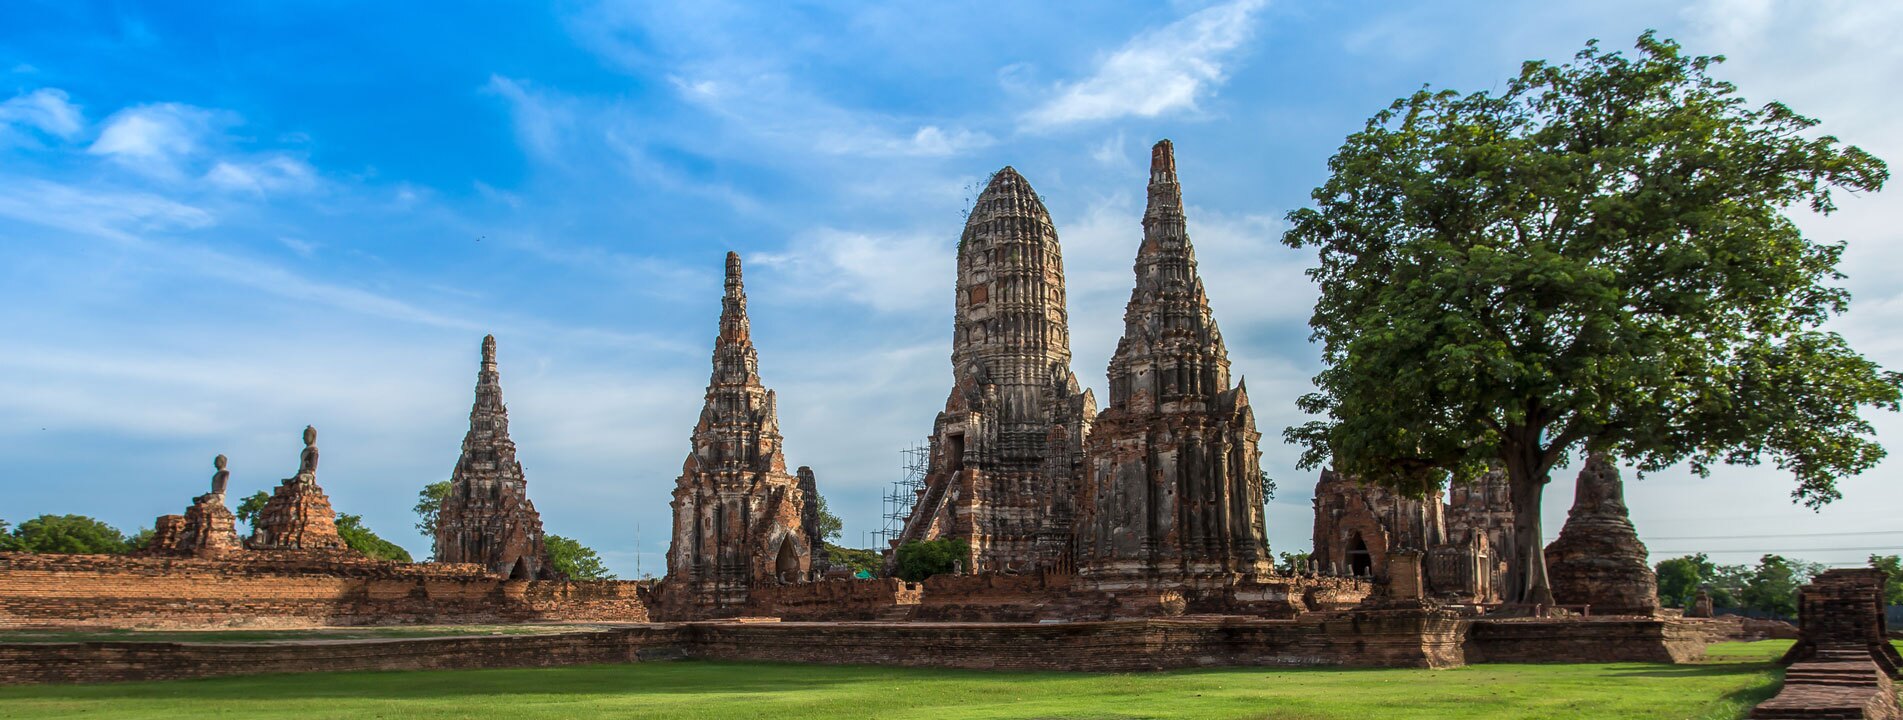 Thailand Tour to Bangkok and Ayutthaya